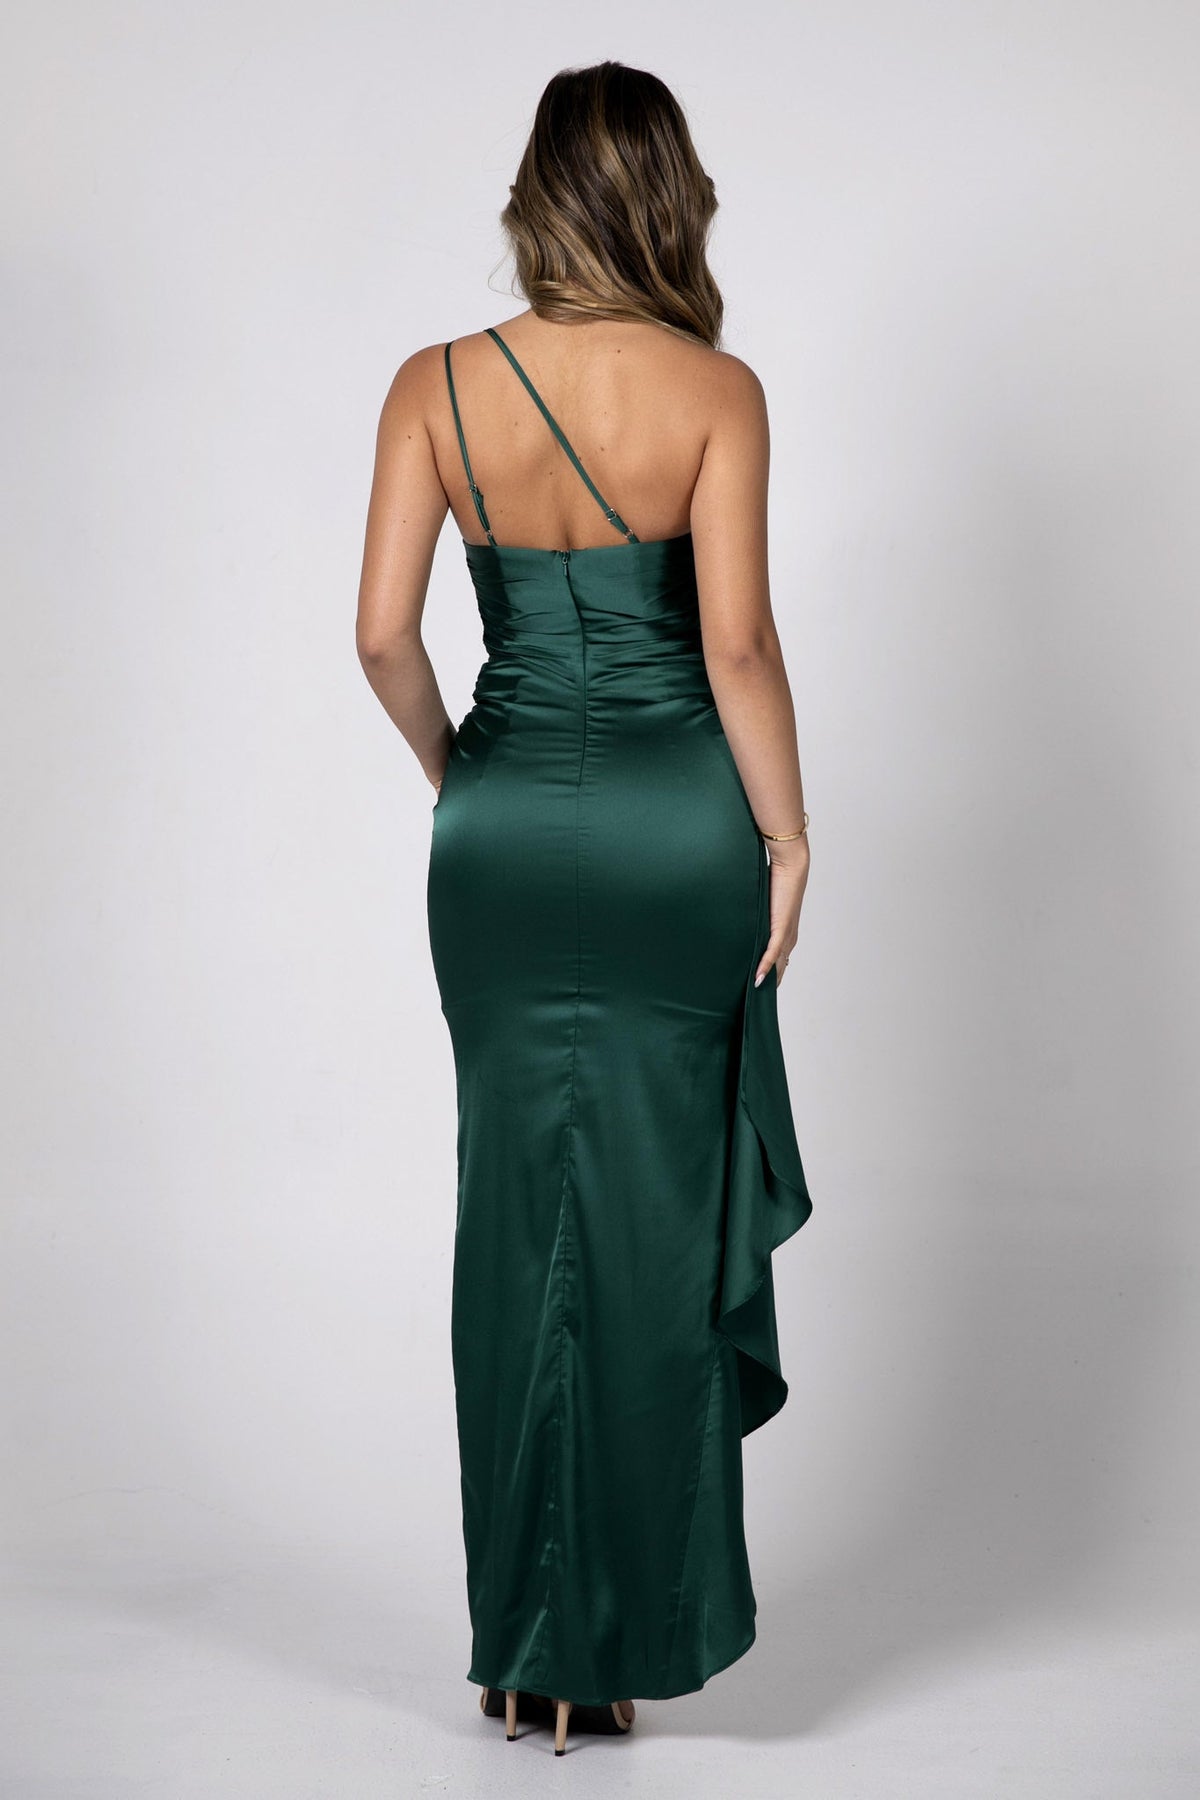 Back Image showing 2 adjustable back straps of Form Fitting Satin Maxi Dress with One Shoulder Neckline, Gathering Detail at Waist and Frill Hemline in Deep Green Color